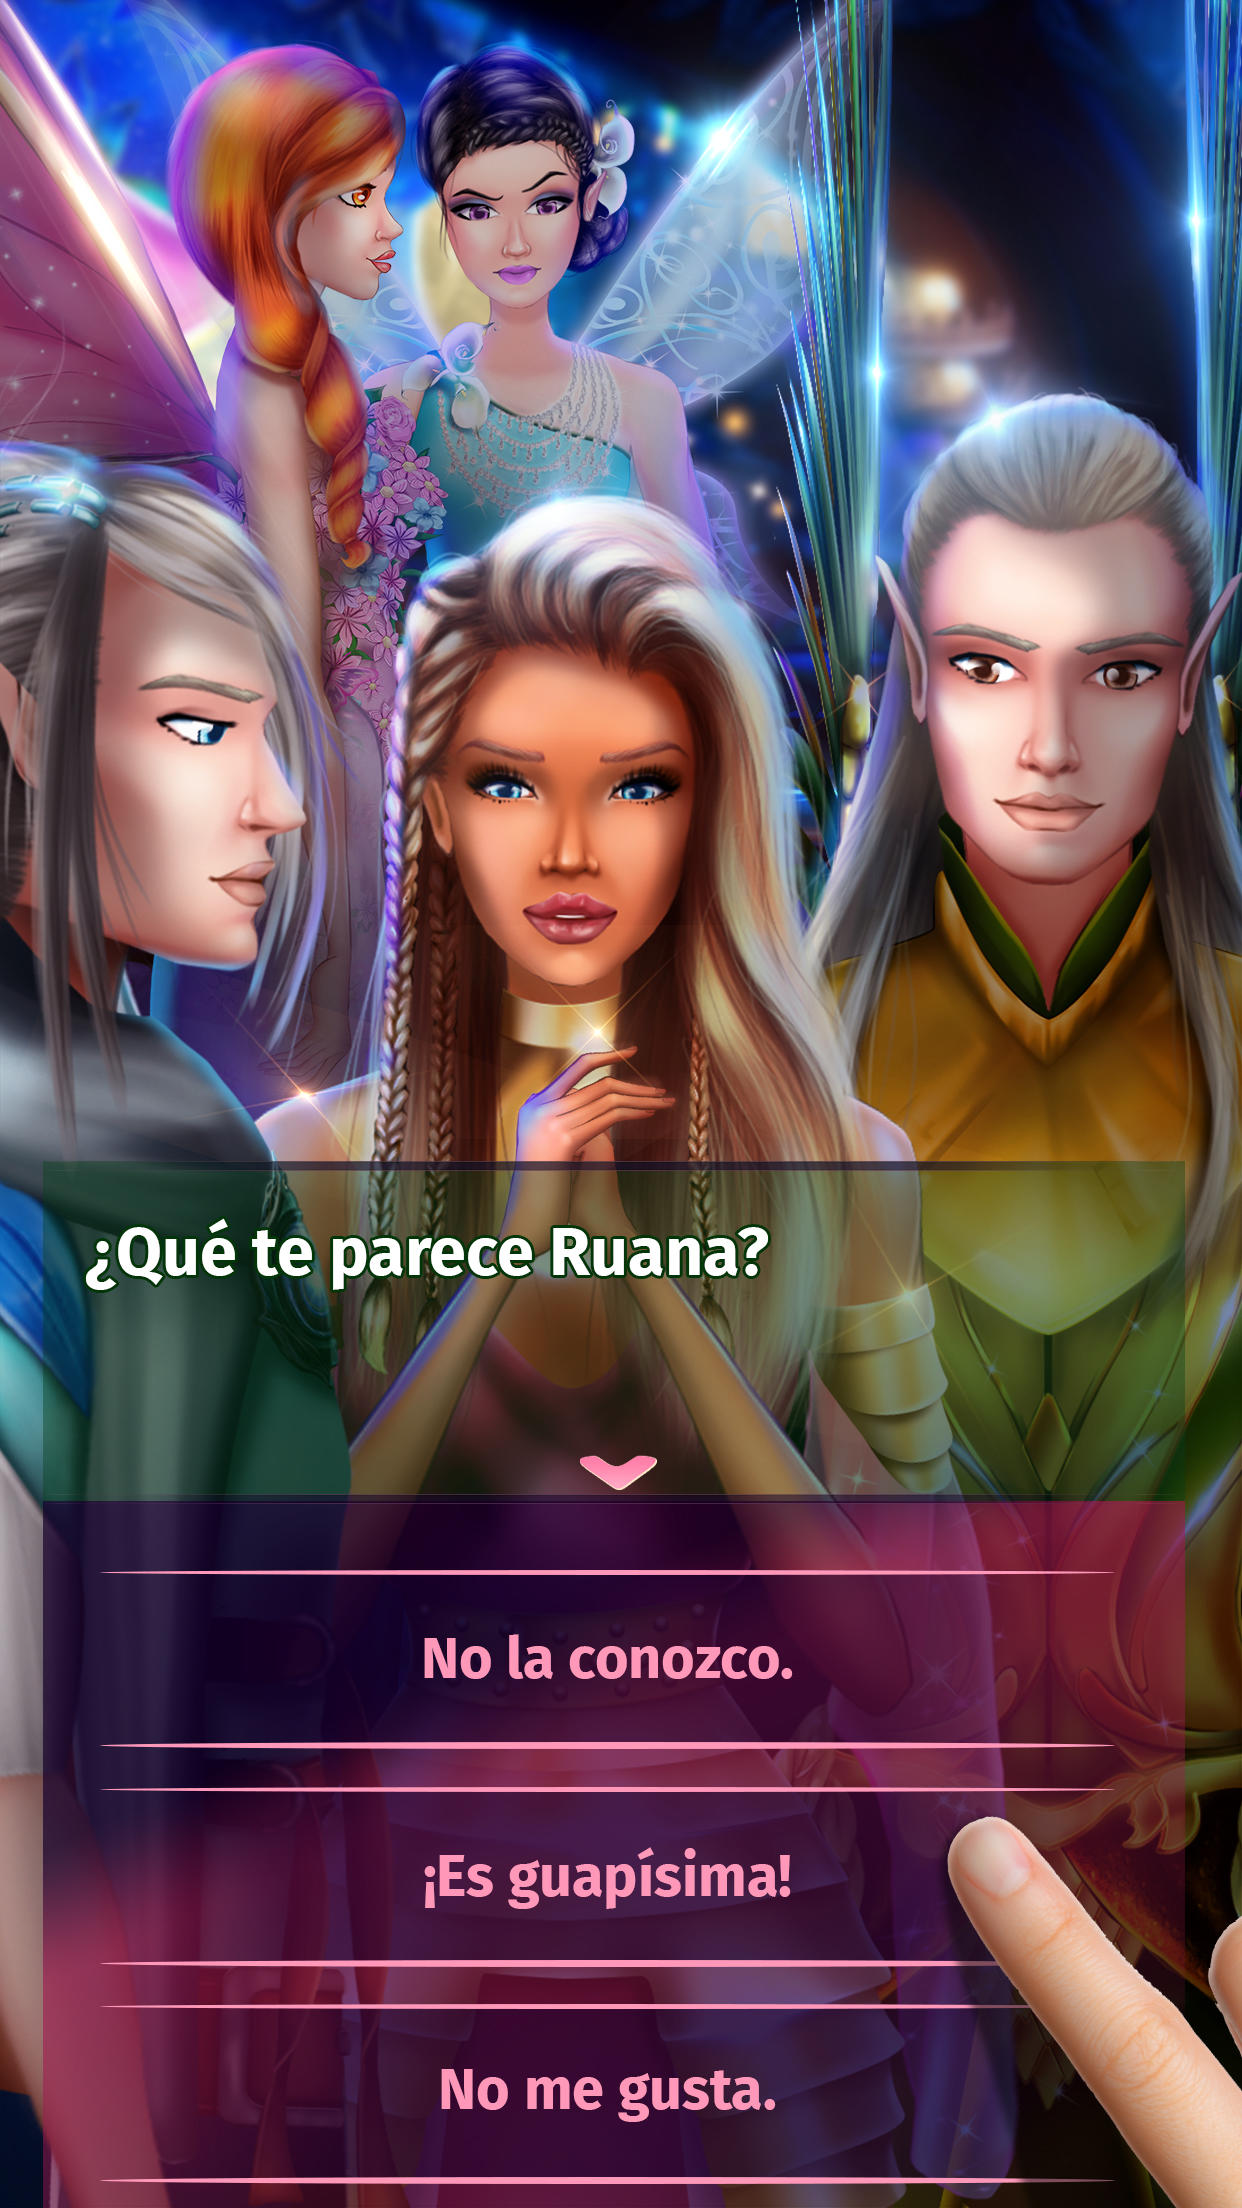 Screenshot 1 of Historia de amor: Fantasía 20.3